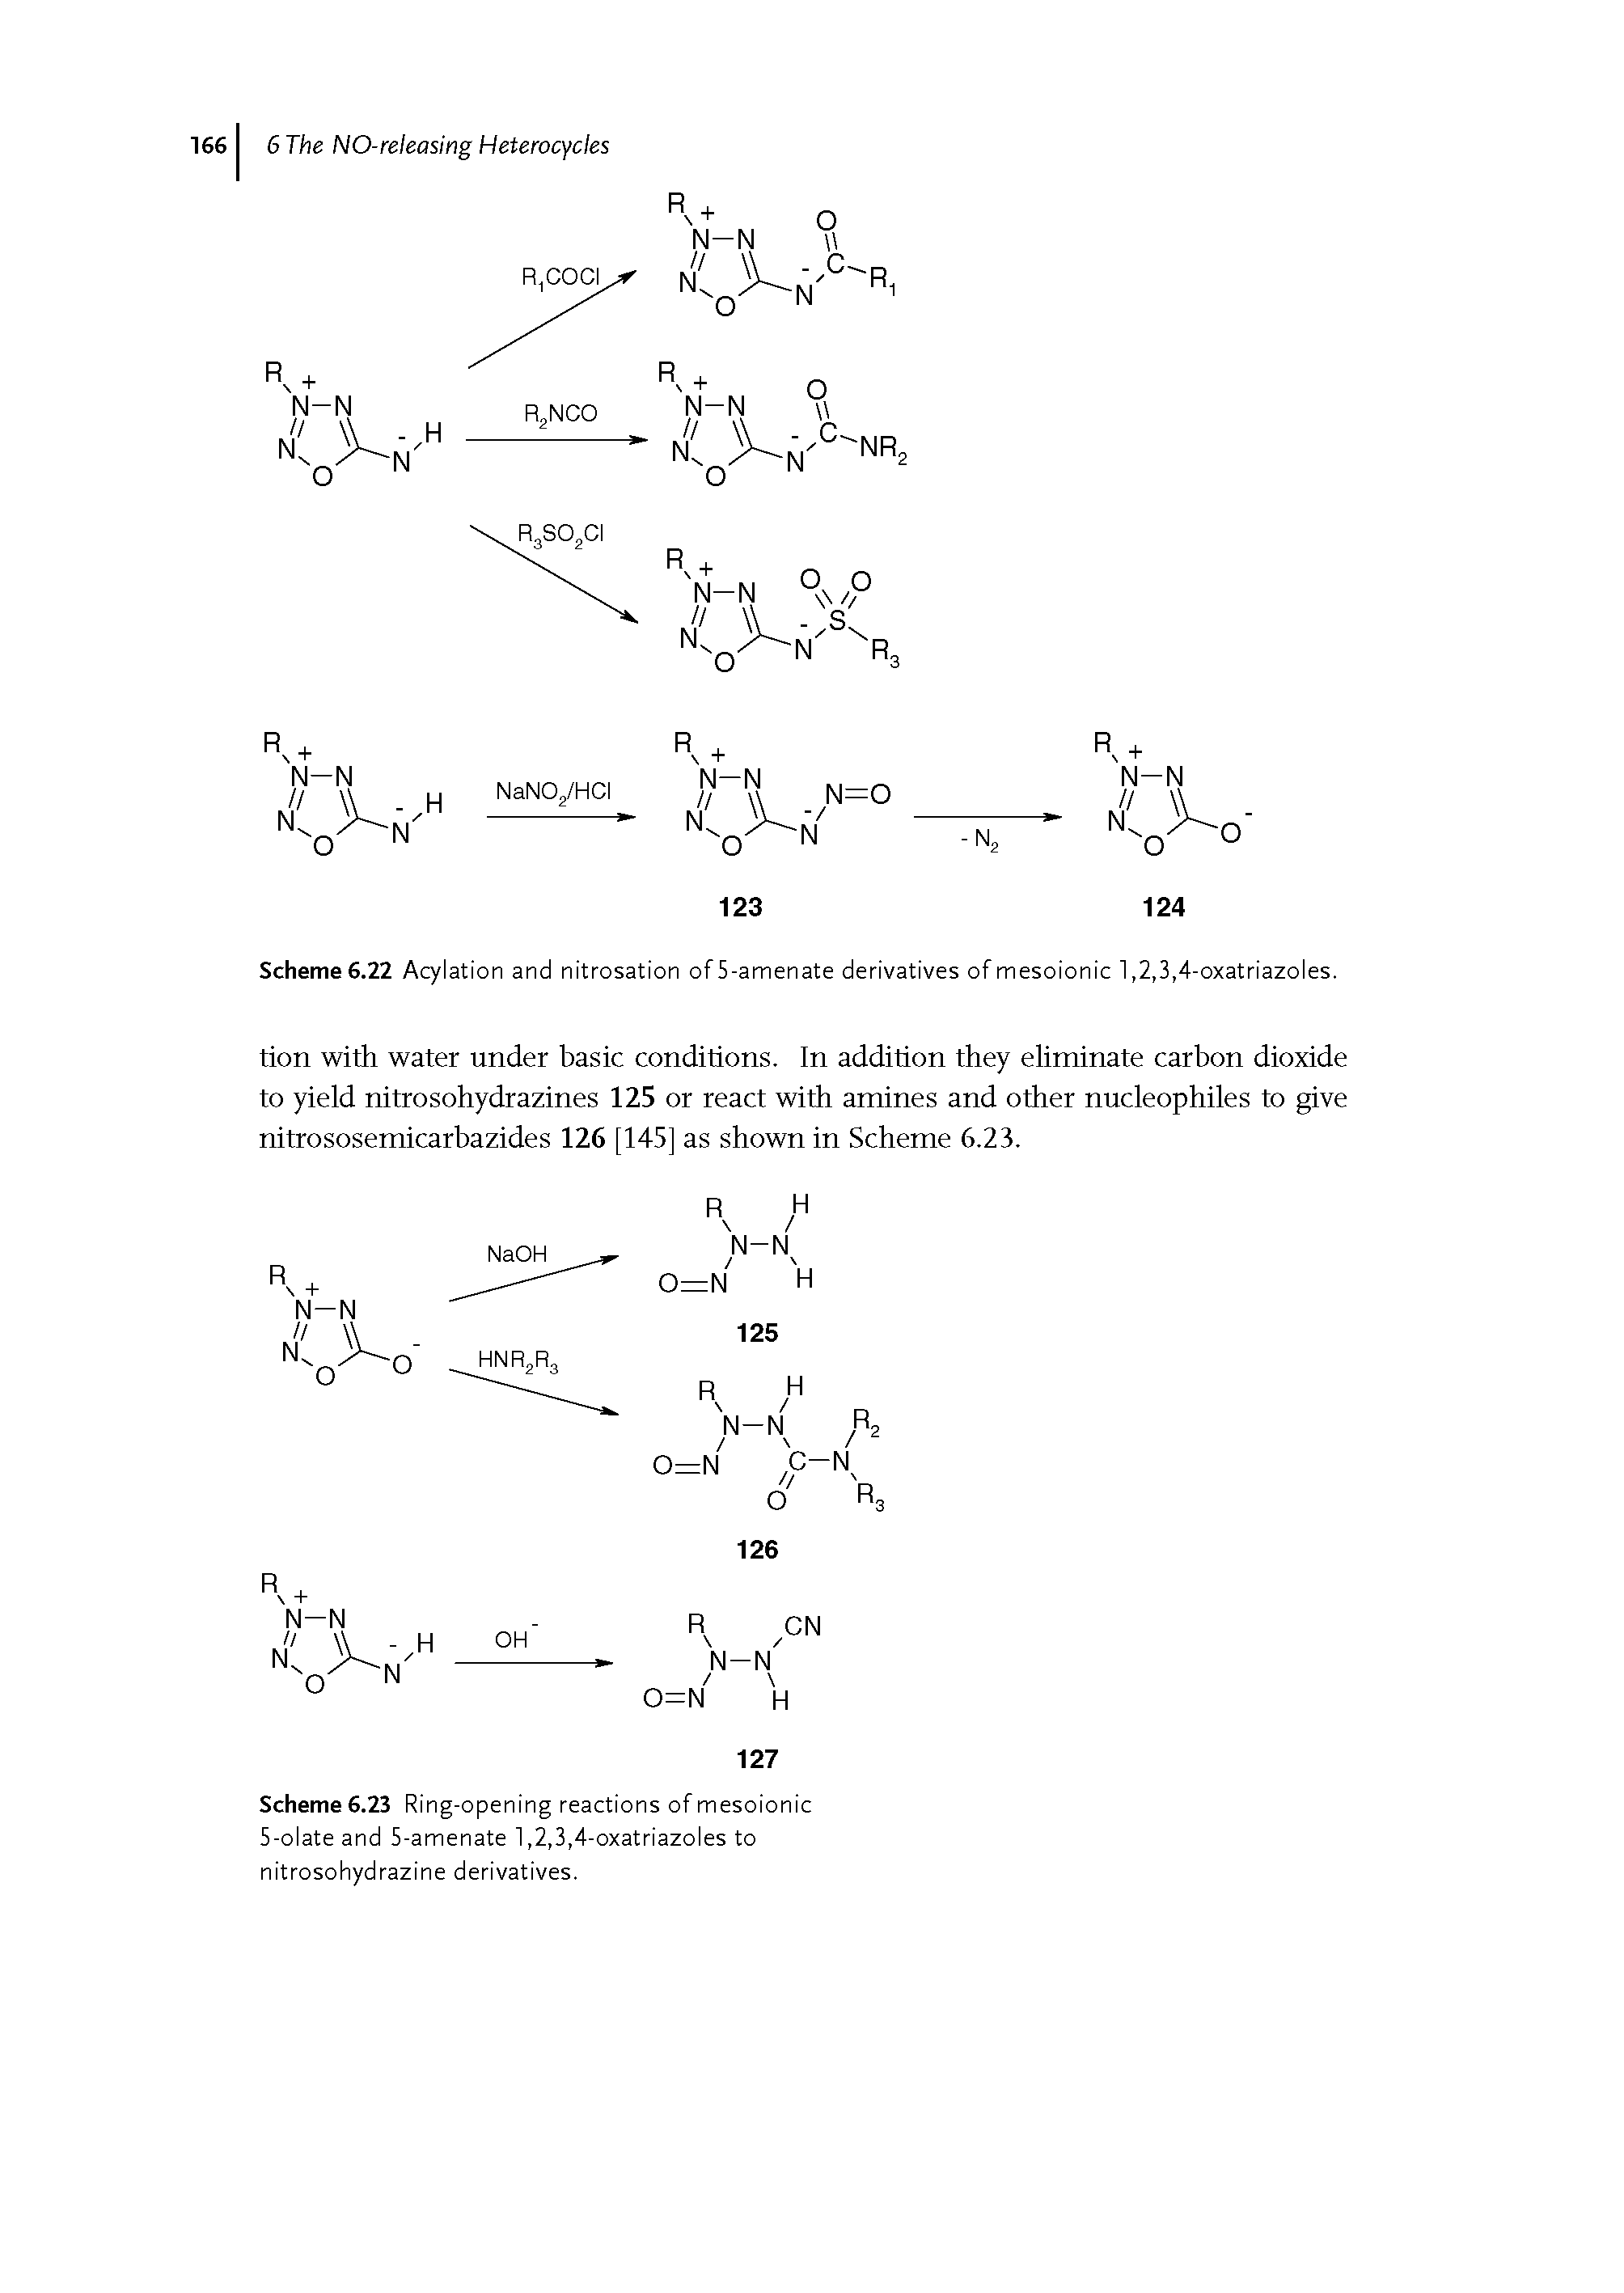 Scheme 6.22 Acylation and nitrosation of 5-amenate derivatives of mesoionic 1,2,3,4-oxatriazoles.